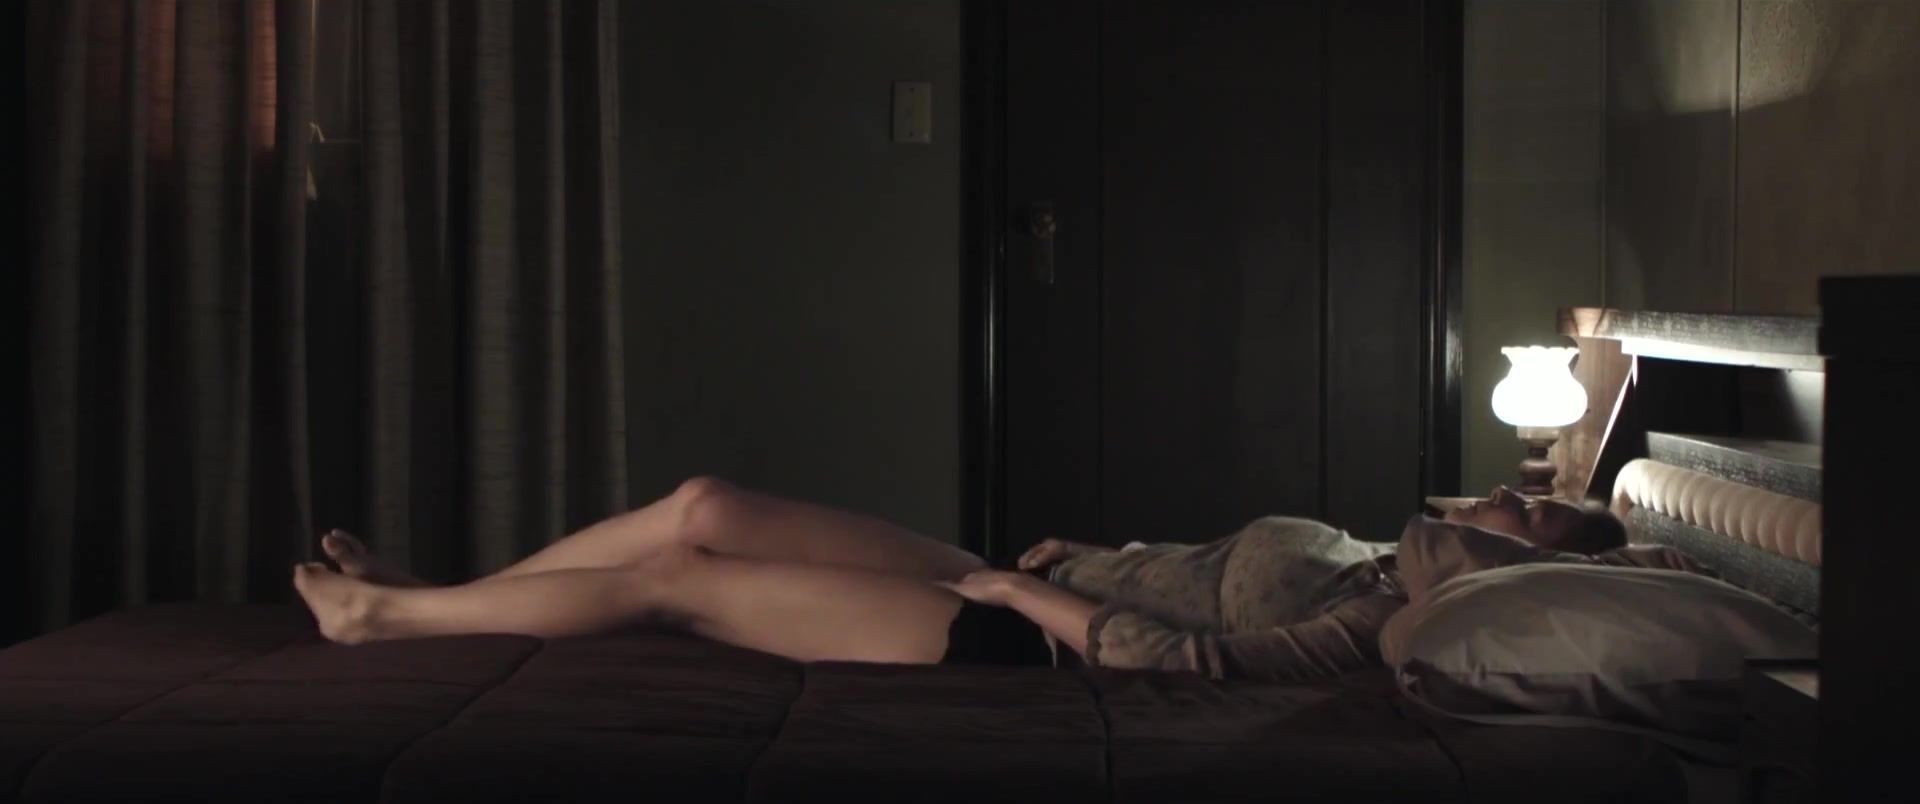 Semen Leeanna Walsman Nude - Dawn (2015) Couples Fucking